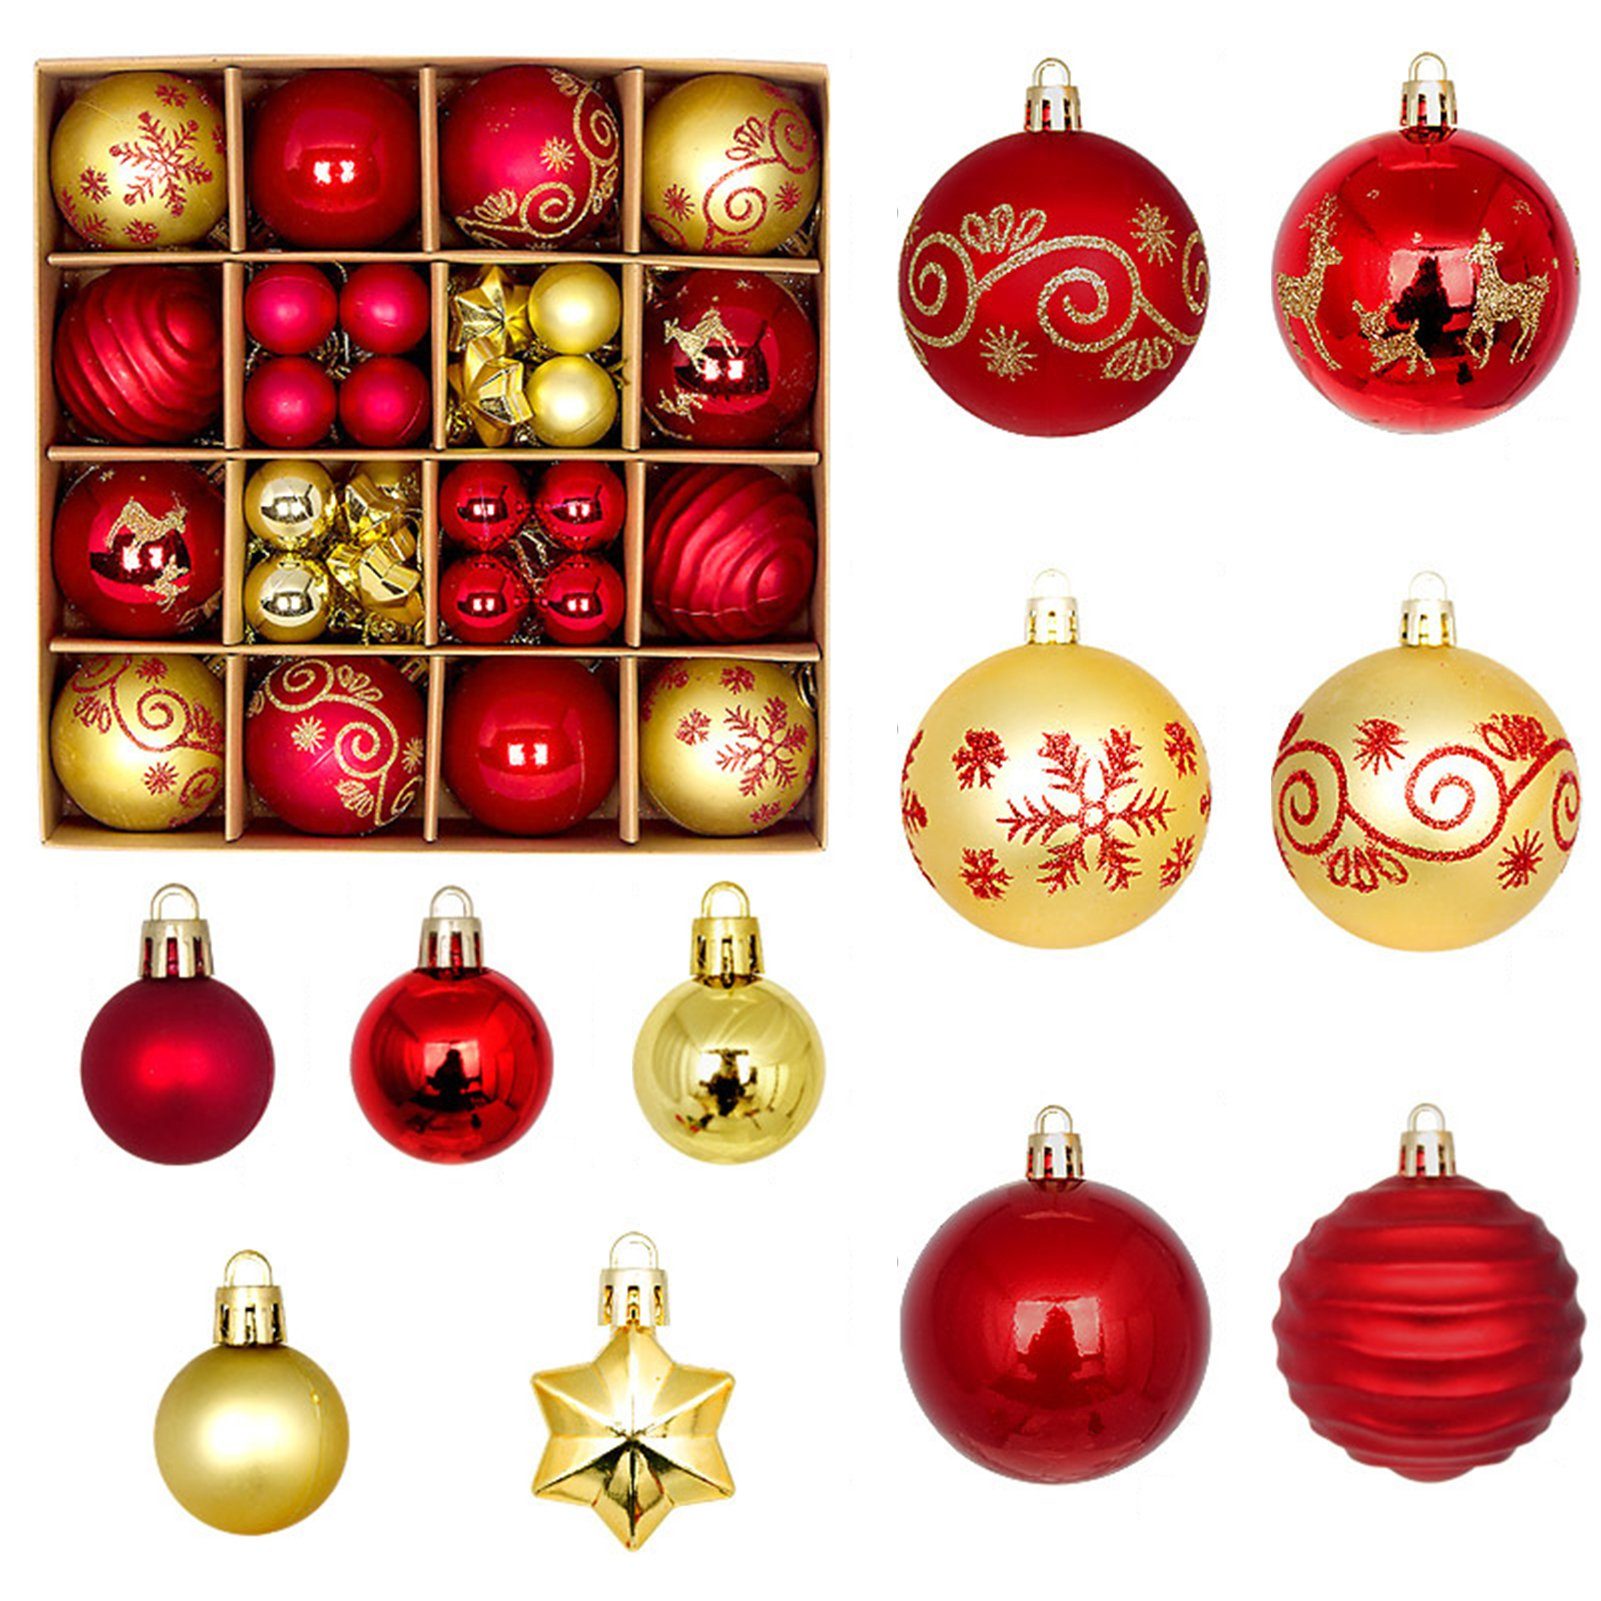 Rutaqian Weihnachtsbaumkugel Weihnachtskugeln, 44 Stück/Set 3-6cm Rot-Weiß-Weihnachtsball-Ornament, Weihnachtskugel Set aus Plastik Farbkugel Geschenkbox D